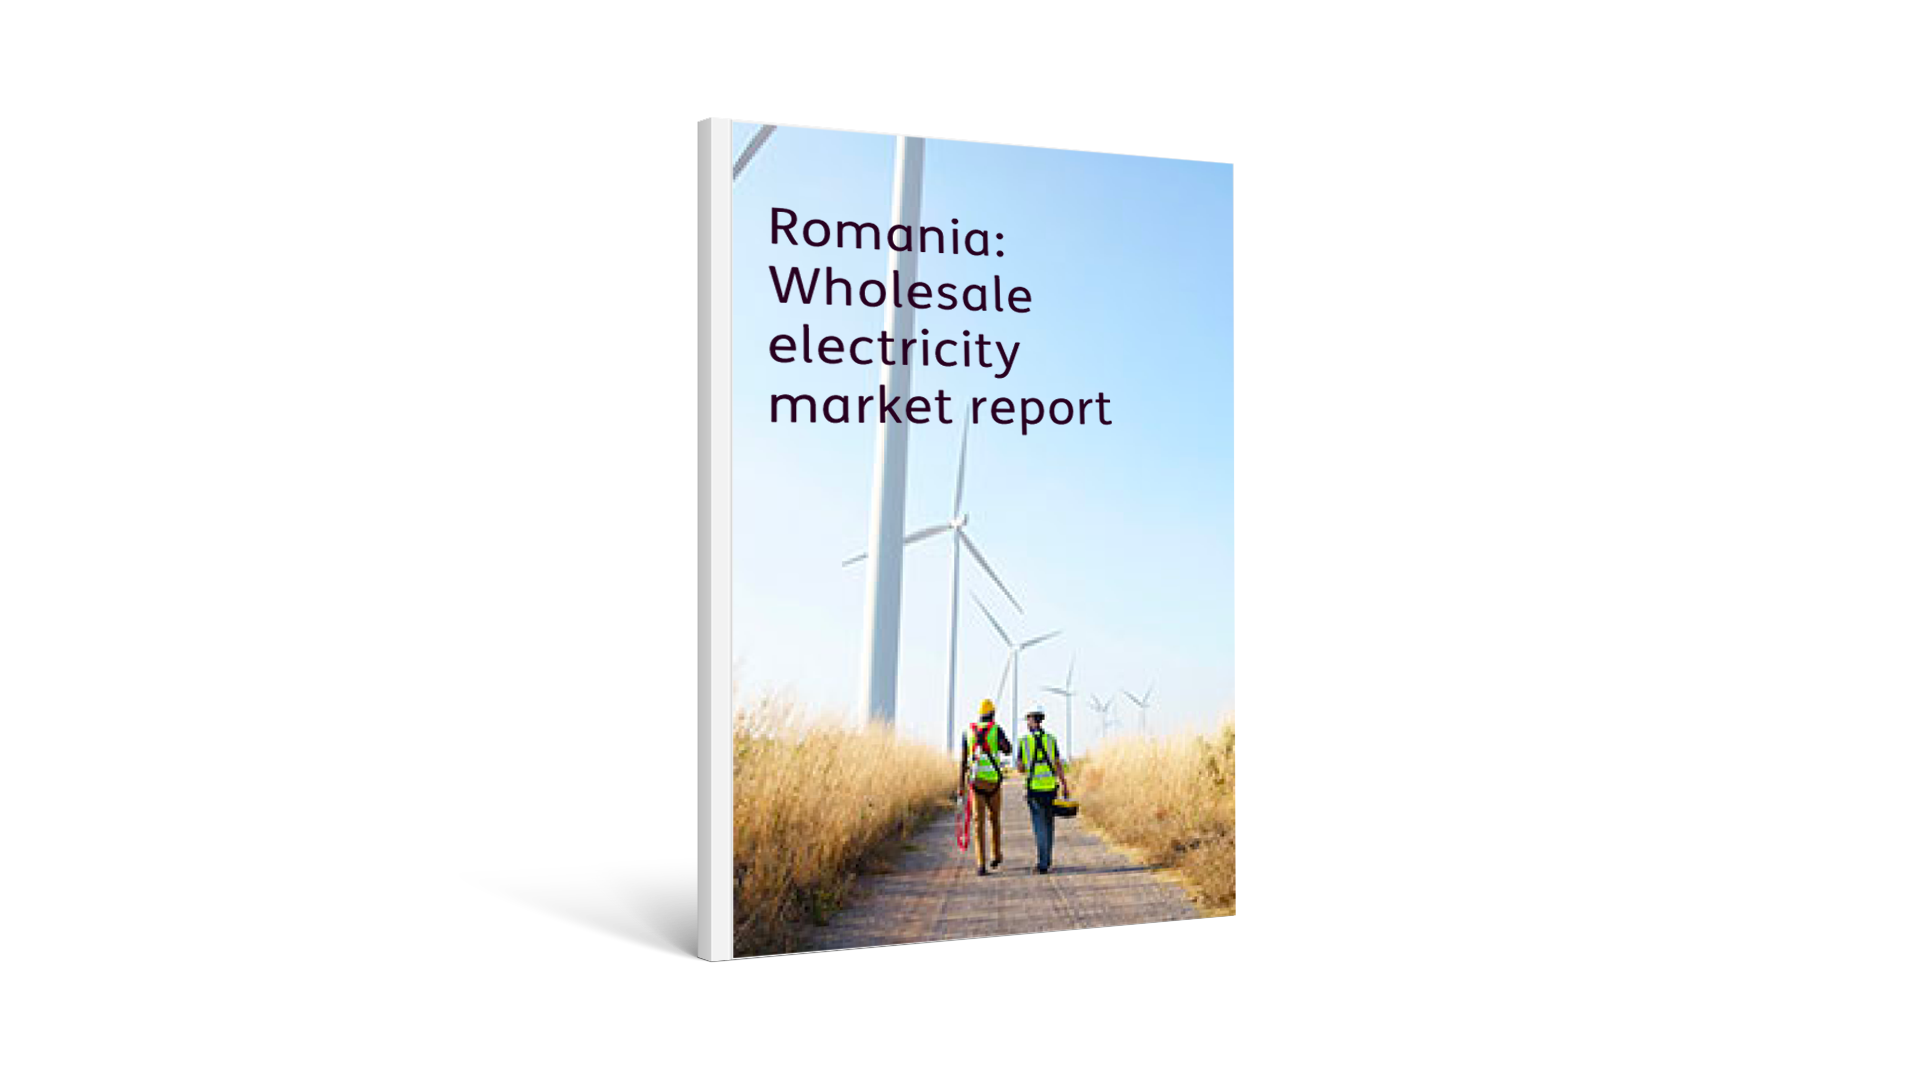 Romania: Wholesale electricity market report